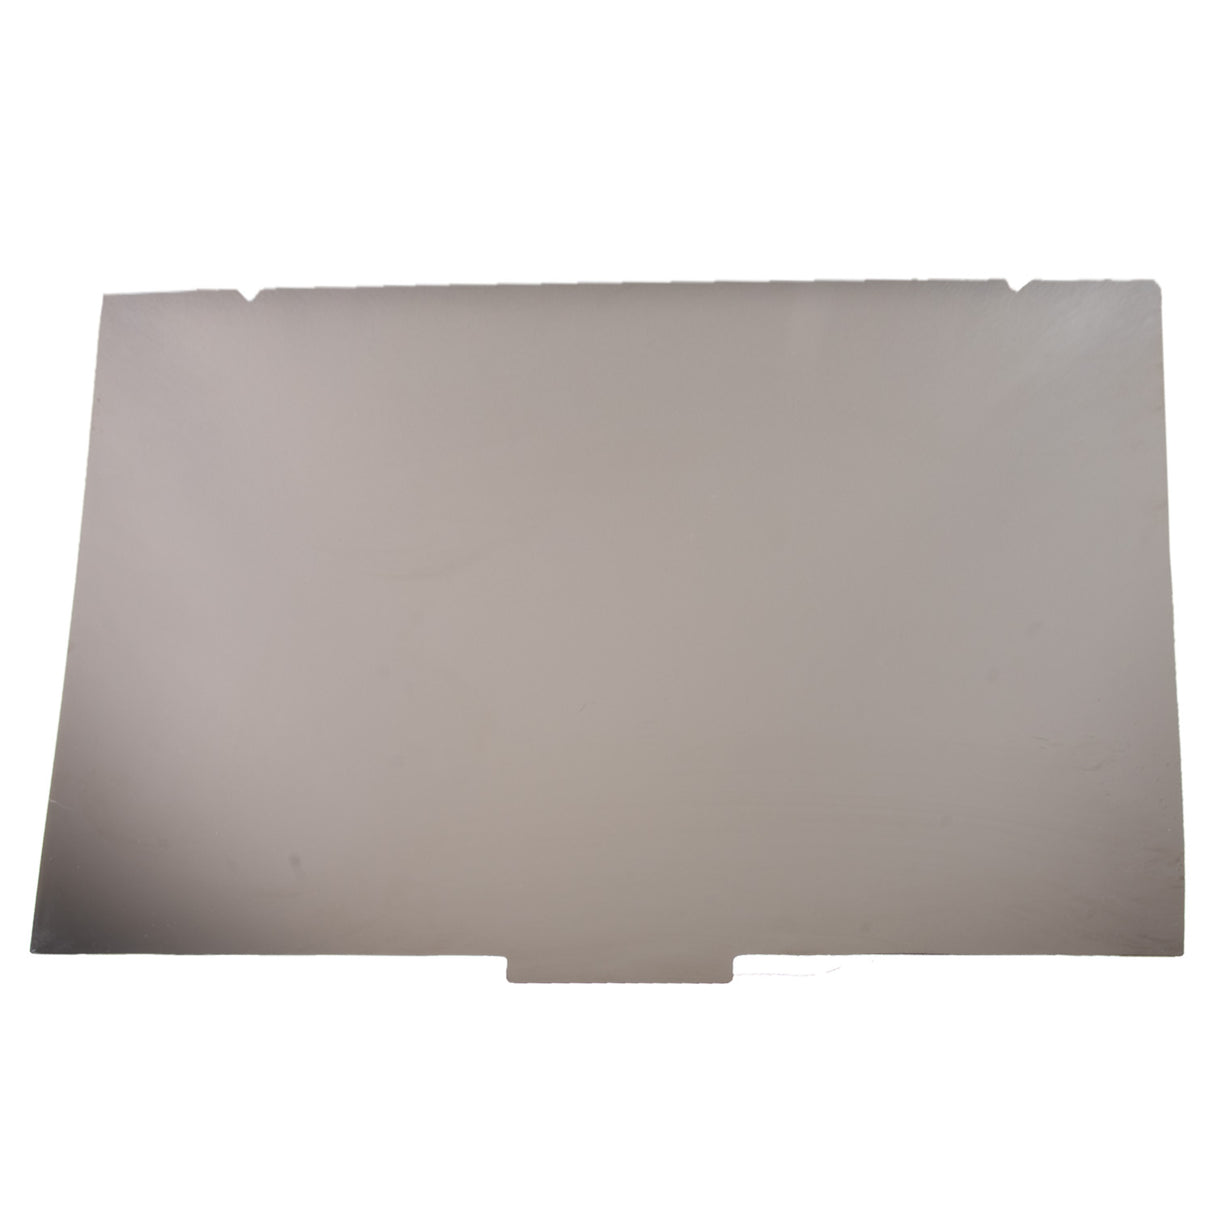 HSP1 Bare Spring Steel Magnetic Bed Plate